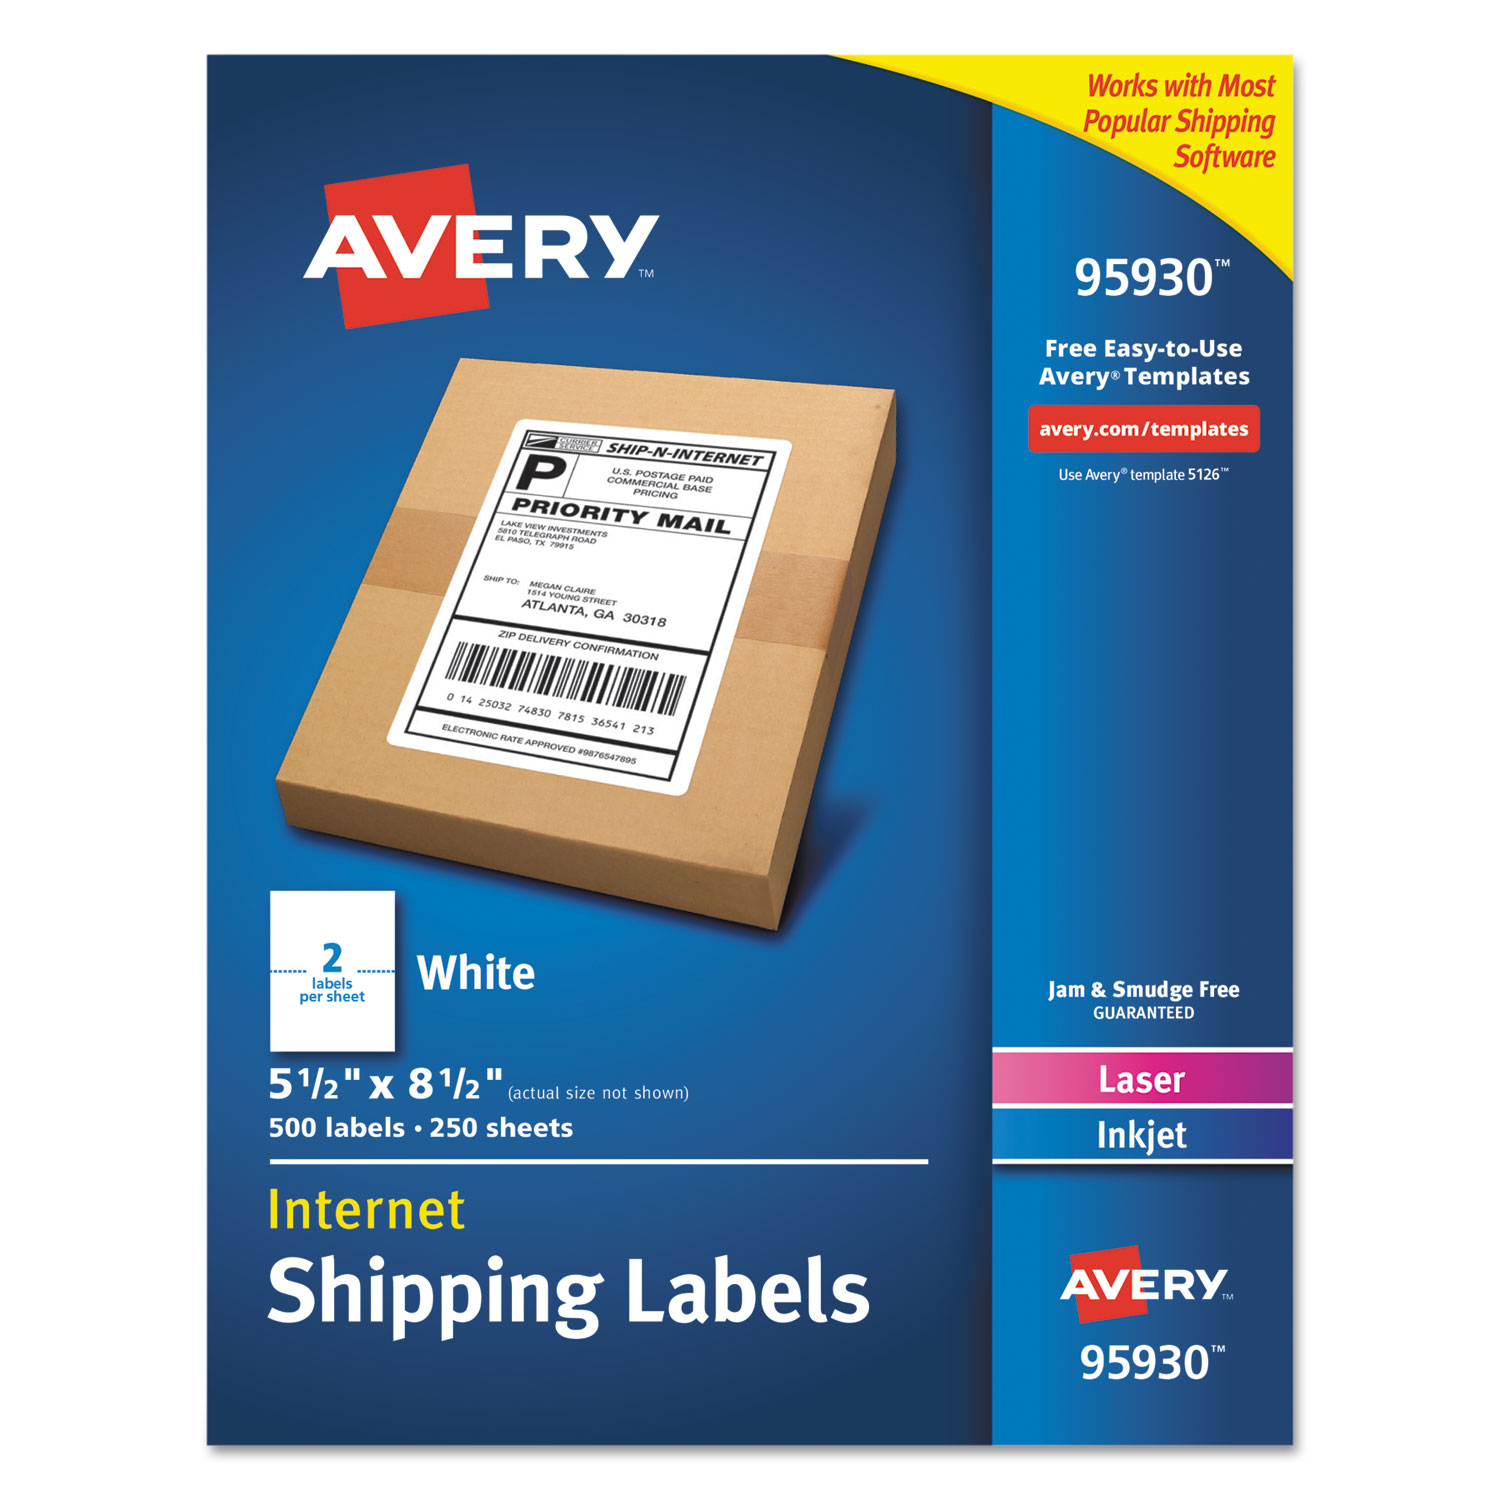  Avery 95930 White Shipping Labels-Bulk Packs, Inkjet/Laser Printers, 5.5 x 8.5, White, 2/Sheet, 250 Sheets/Box (AVE95930) 